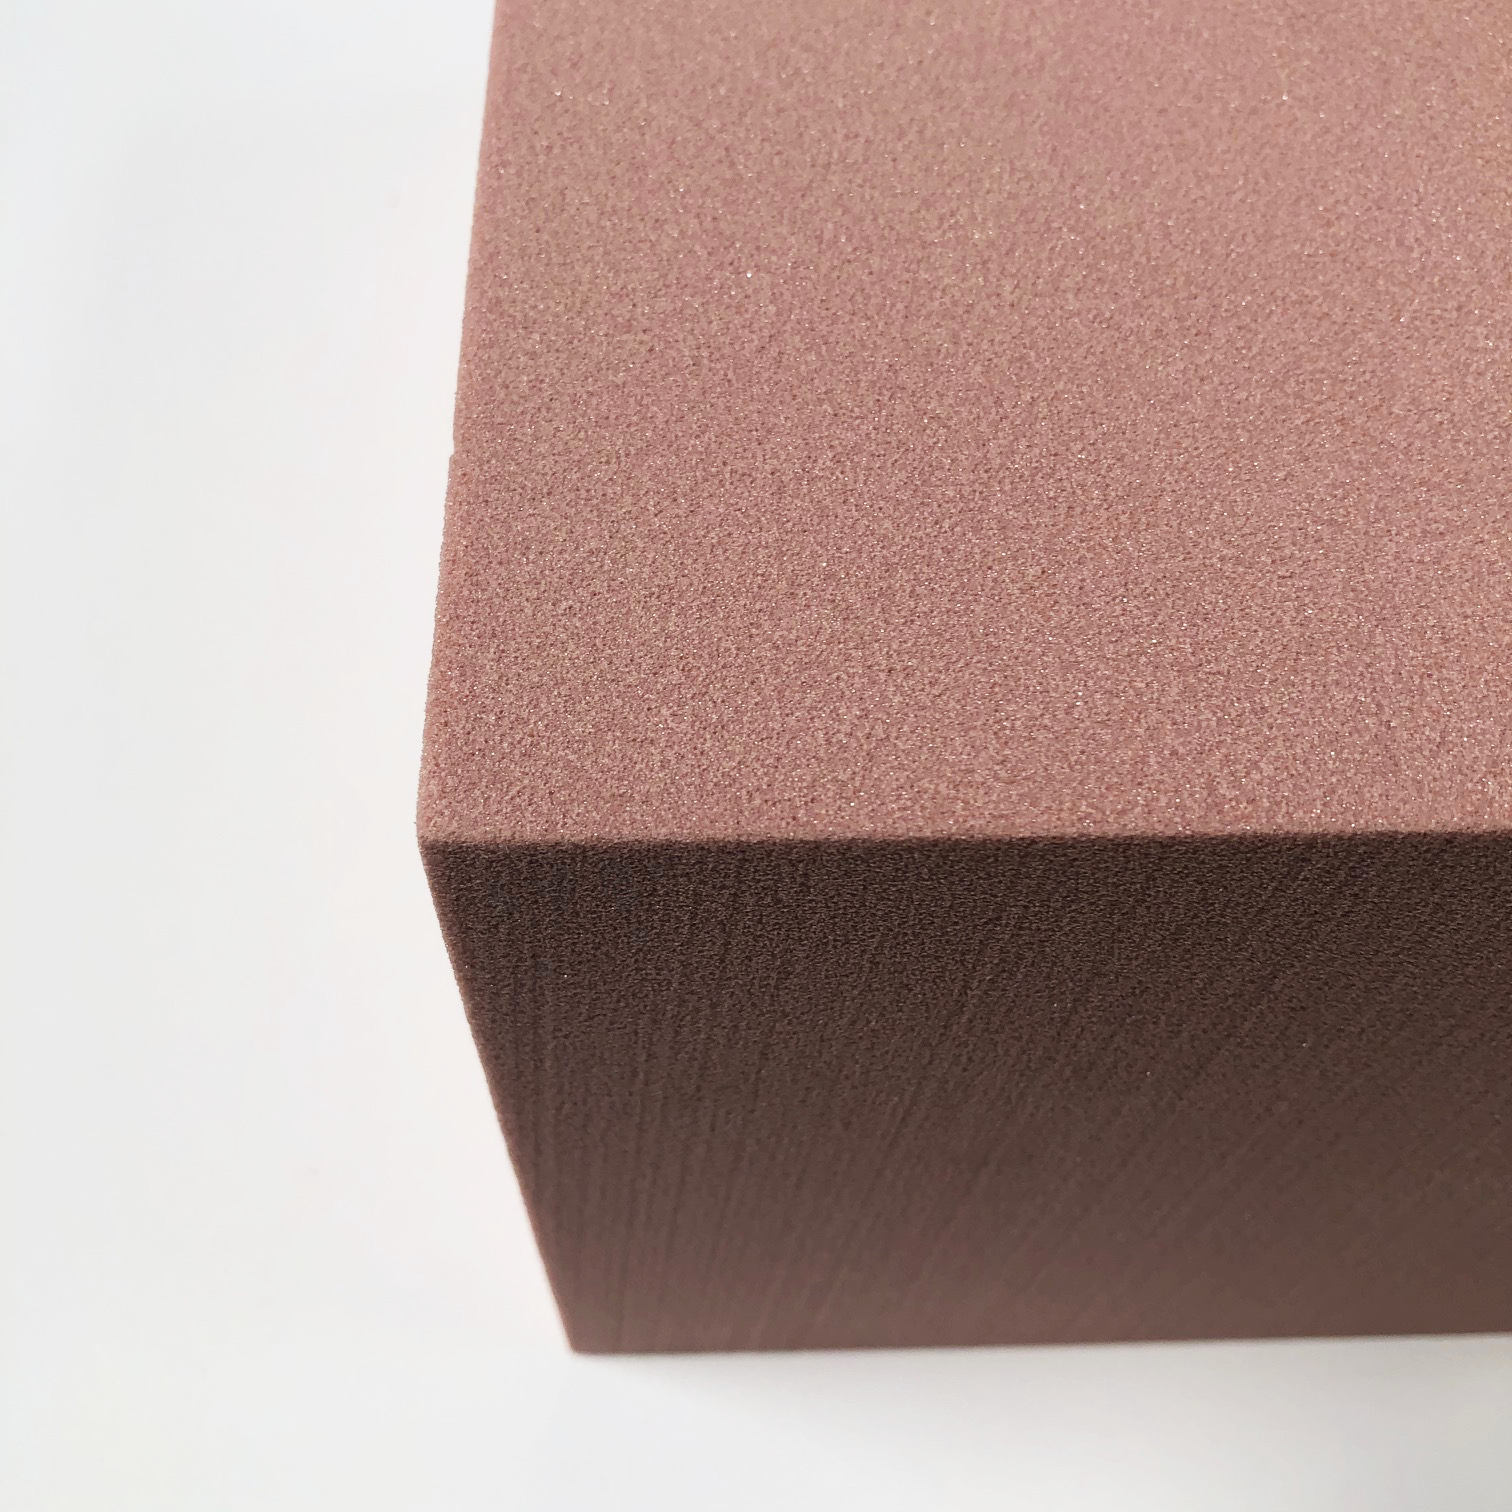 180Pcs polyurethane Foam Blocks for Crafts Supplies, DIY Projects